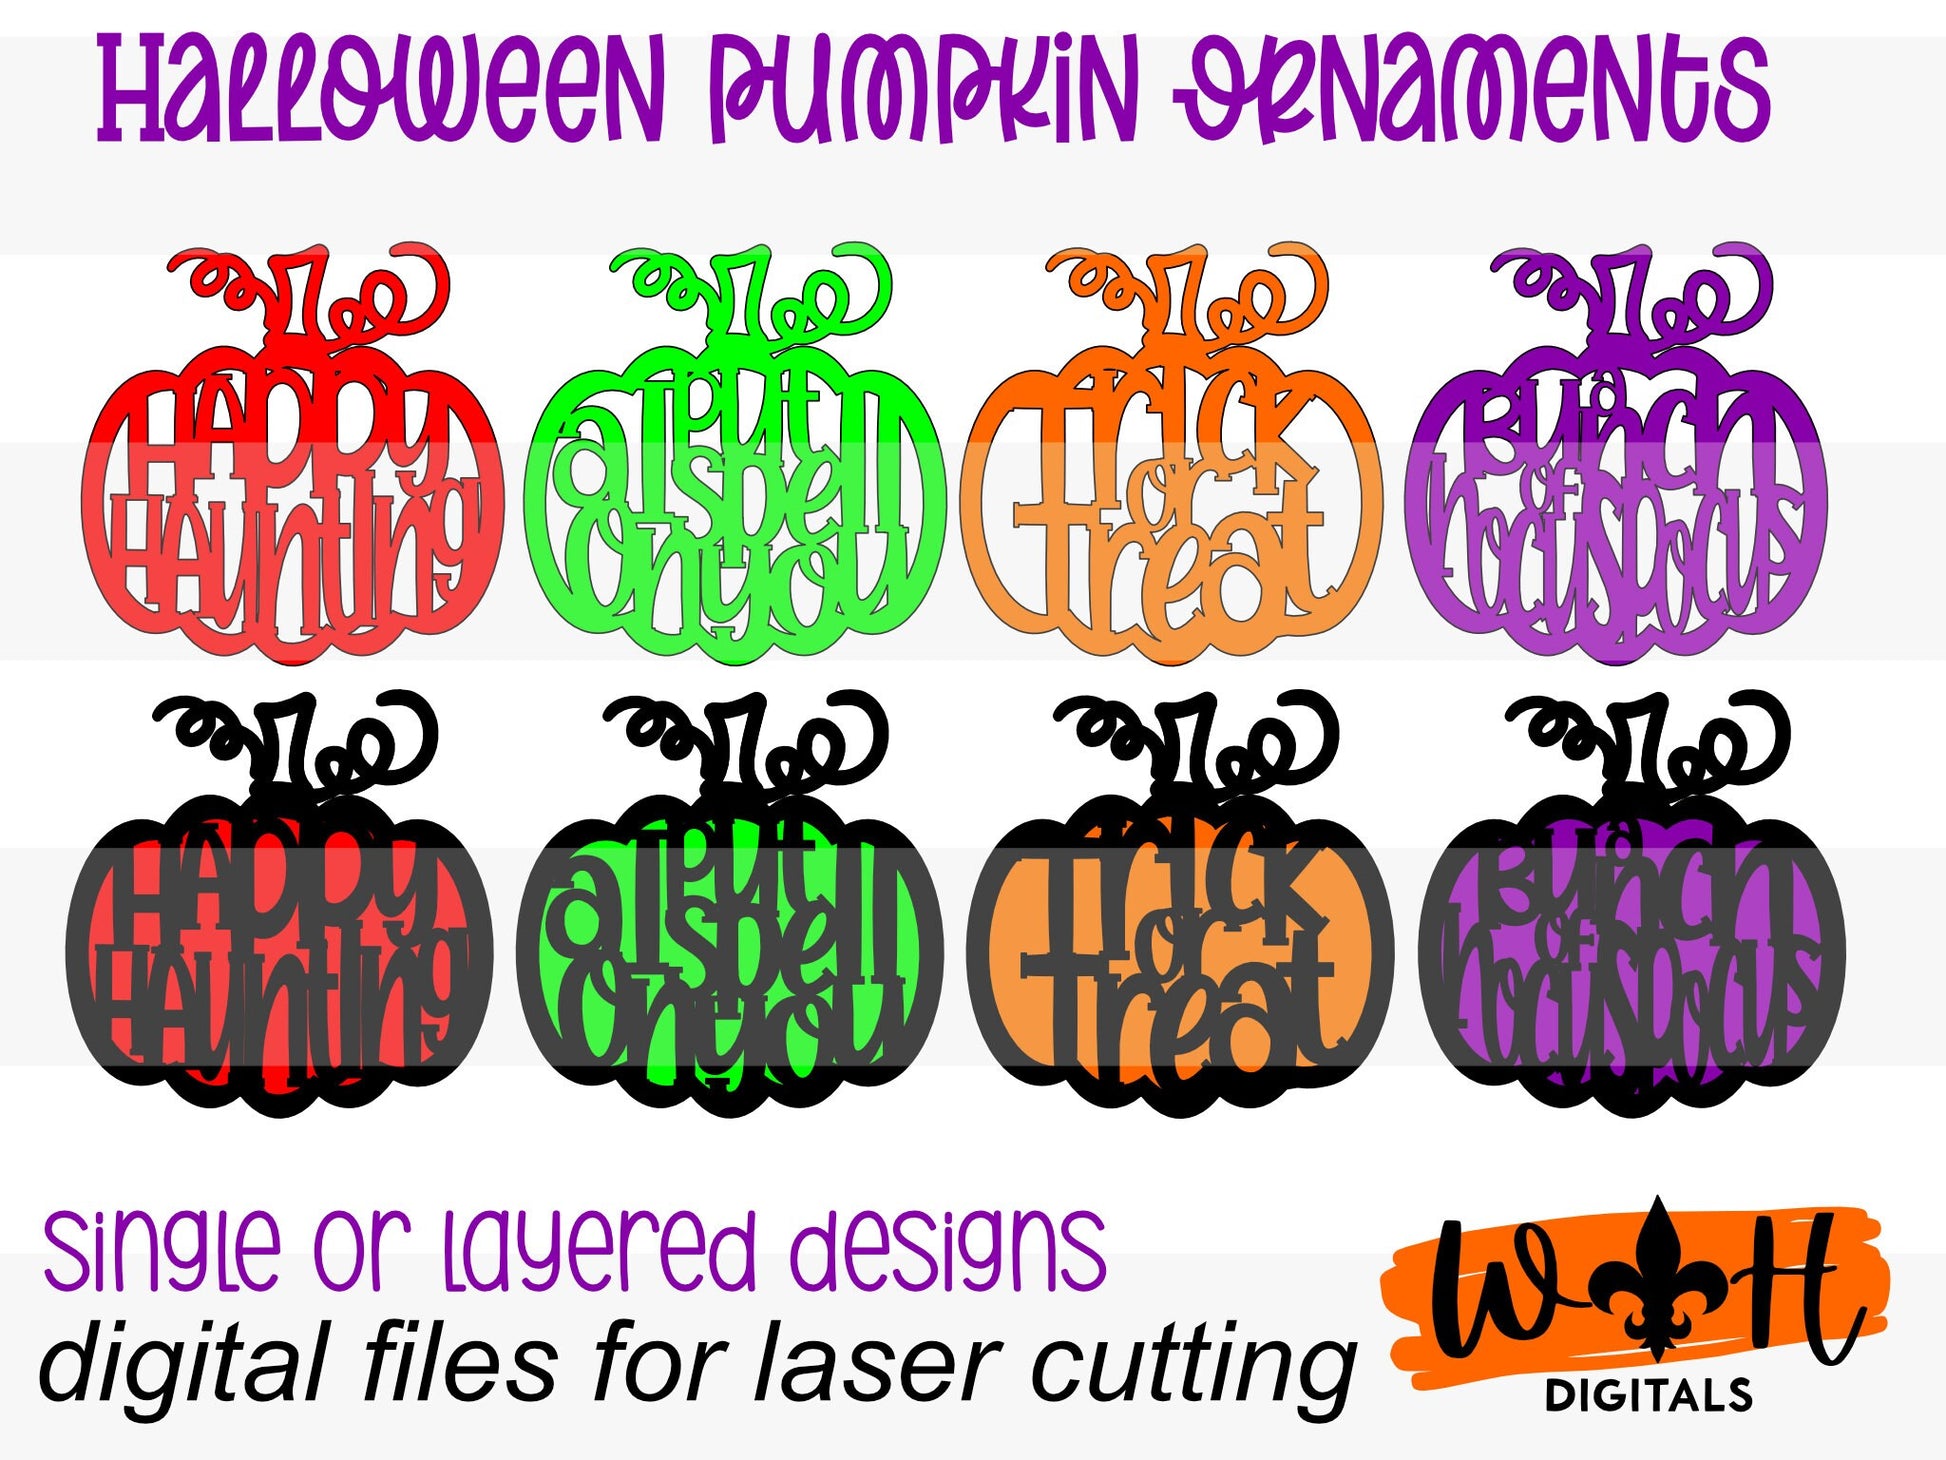 Pumpkin Welded Word Ornament Bundle For Halloween Trees - Trick or Treat Pumpkins - Quick Cut File For Glowforge Lasers - Digital SVG File